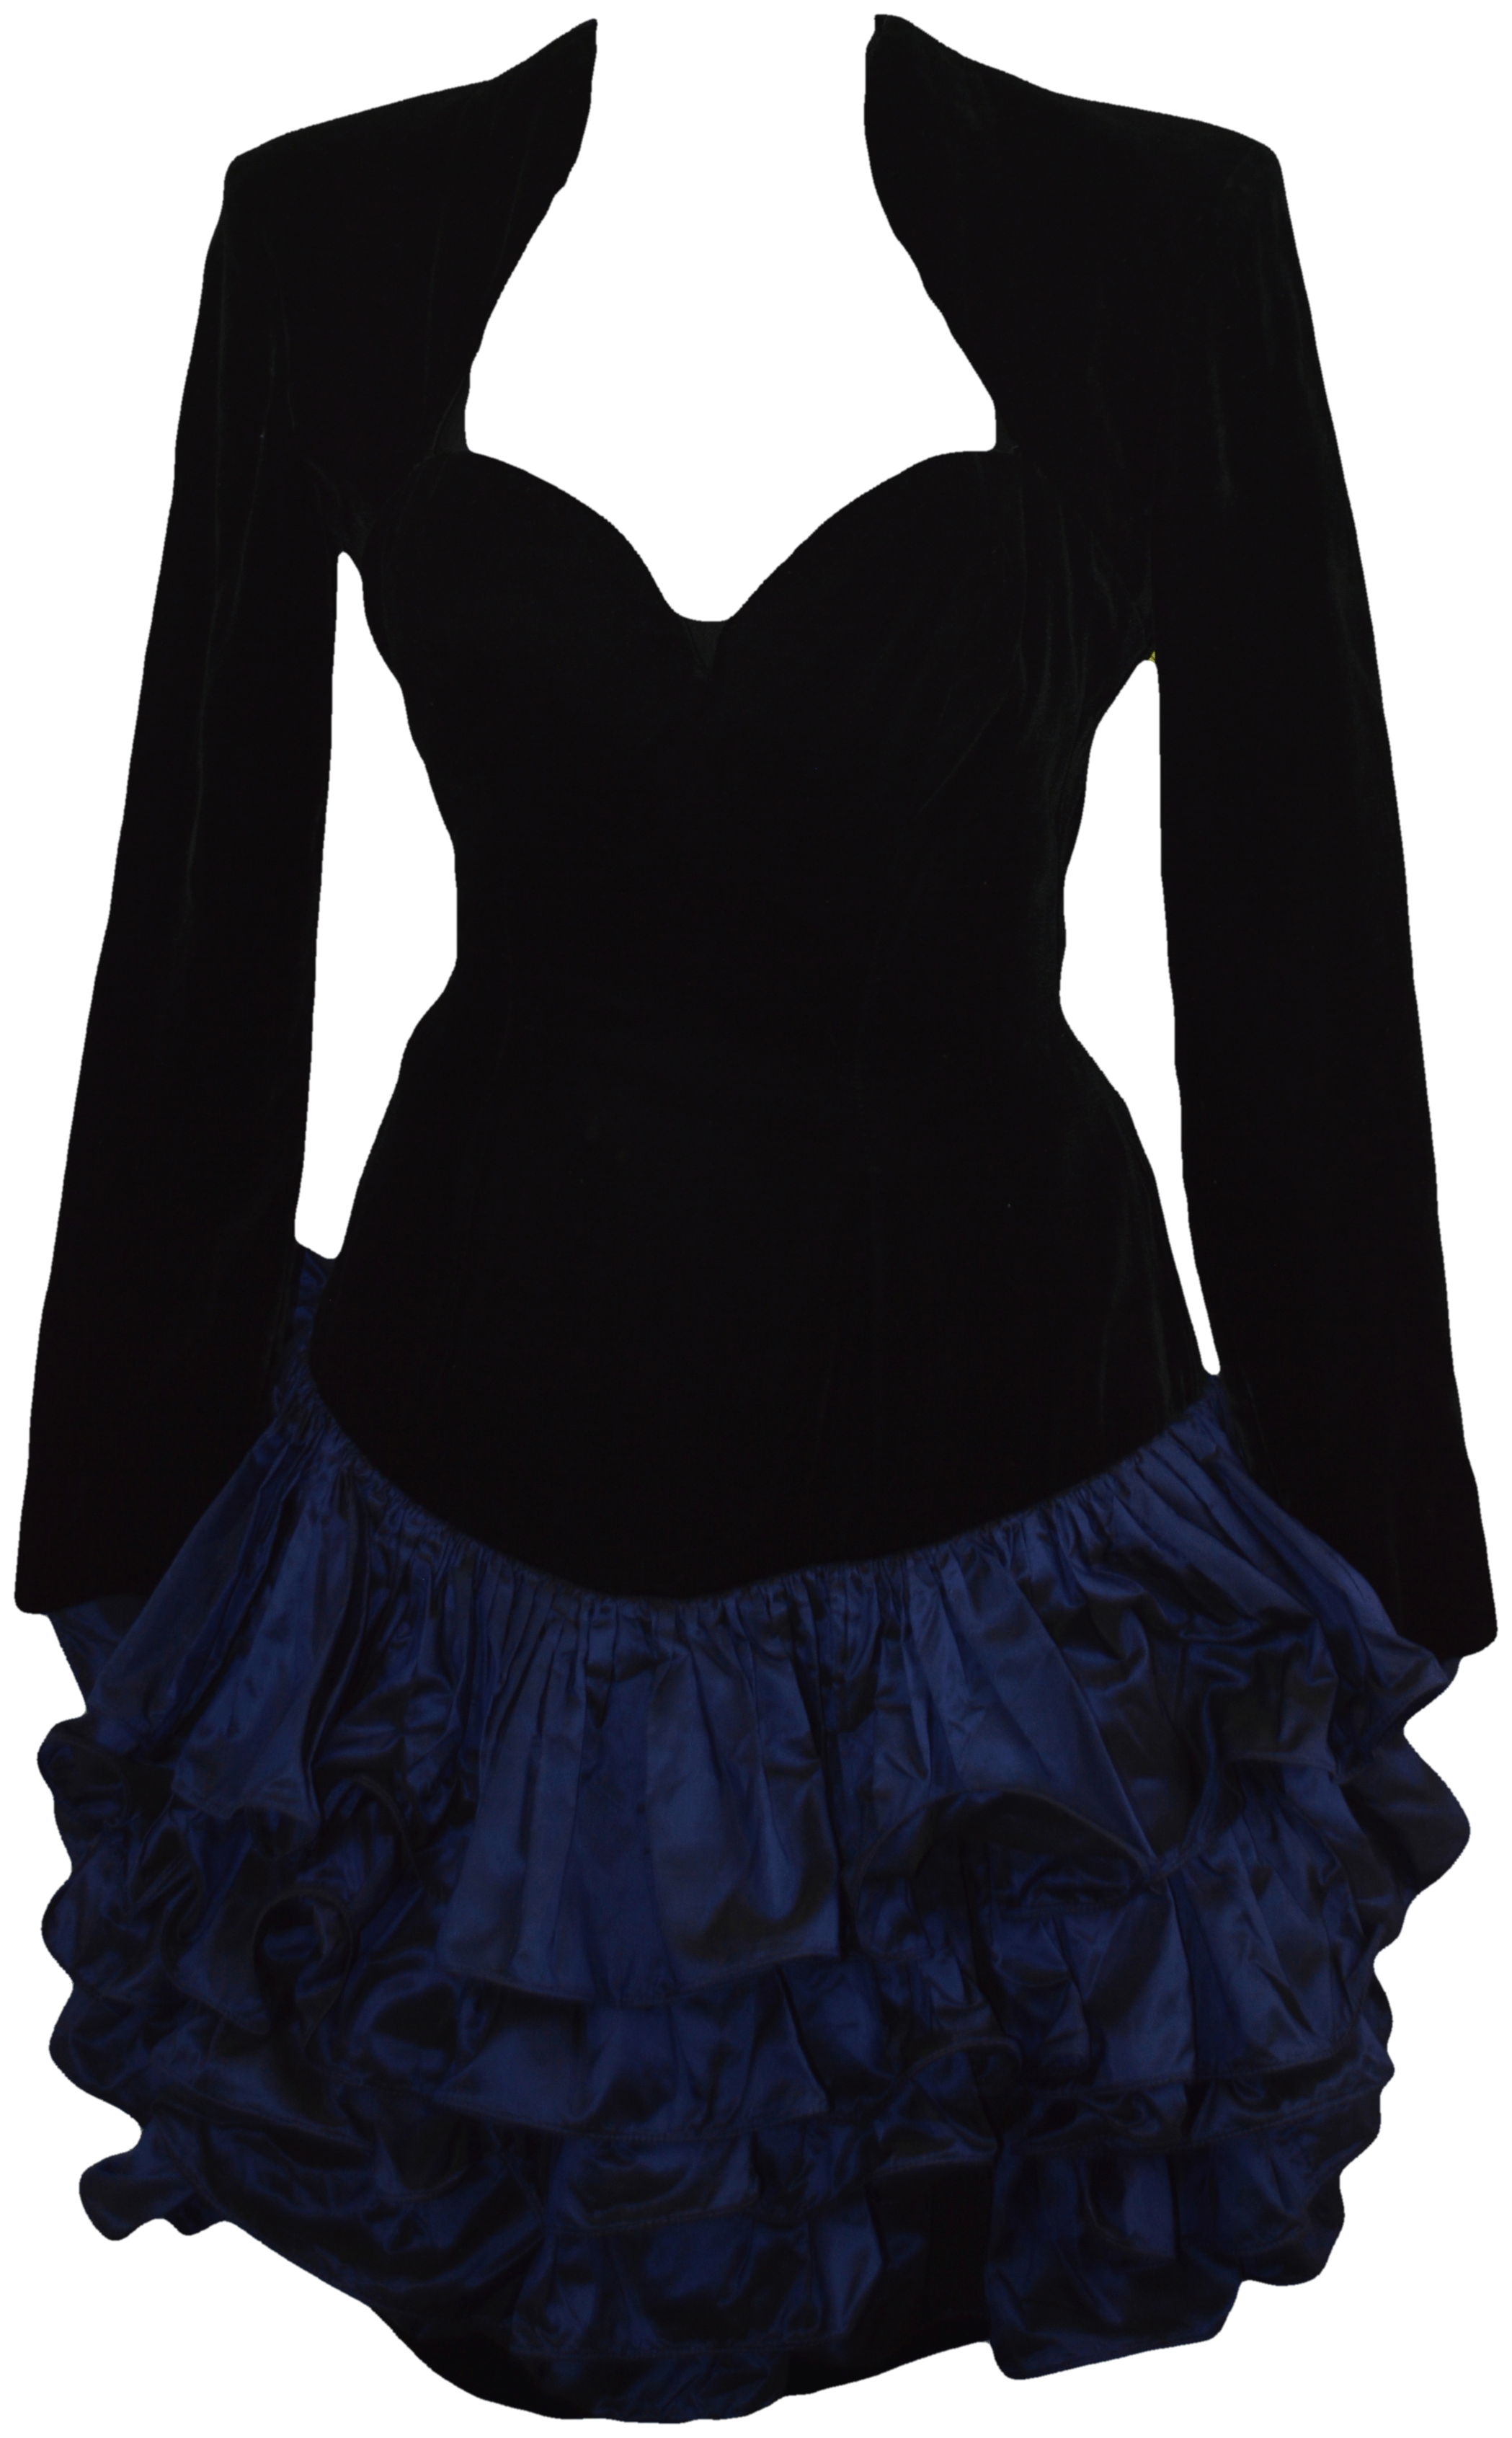 1980\u2019s Vicky Tiel couture black velvet and cheetah print dress